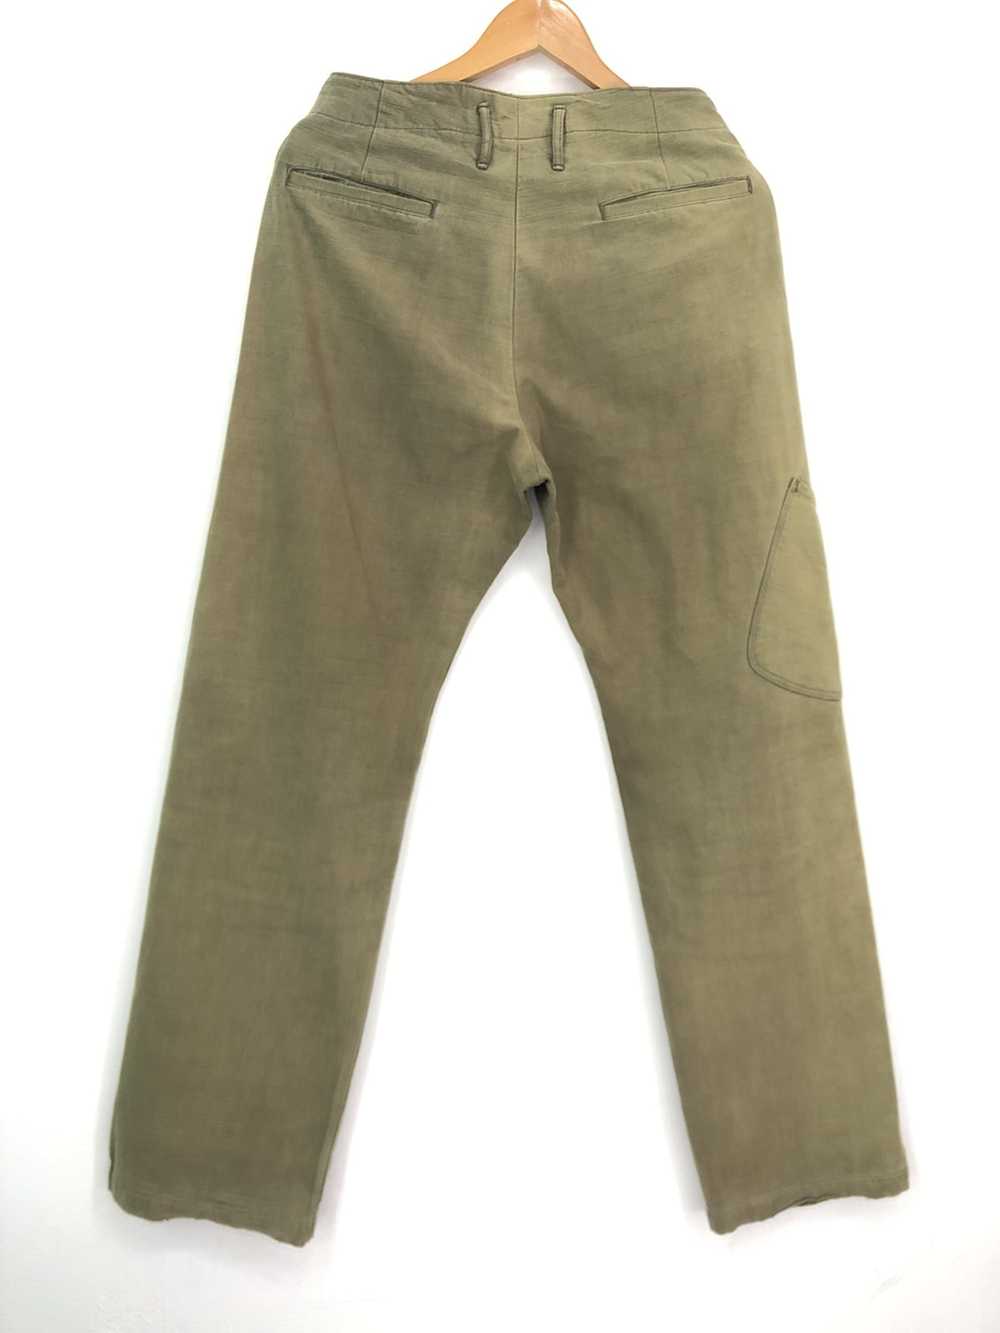 Kapital Kapital Kiro Hirata 3 Pocket Brown Pants - image 4